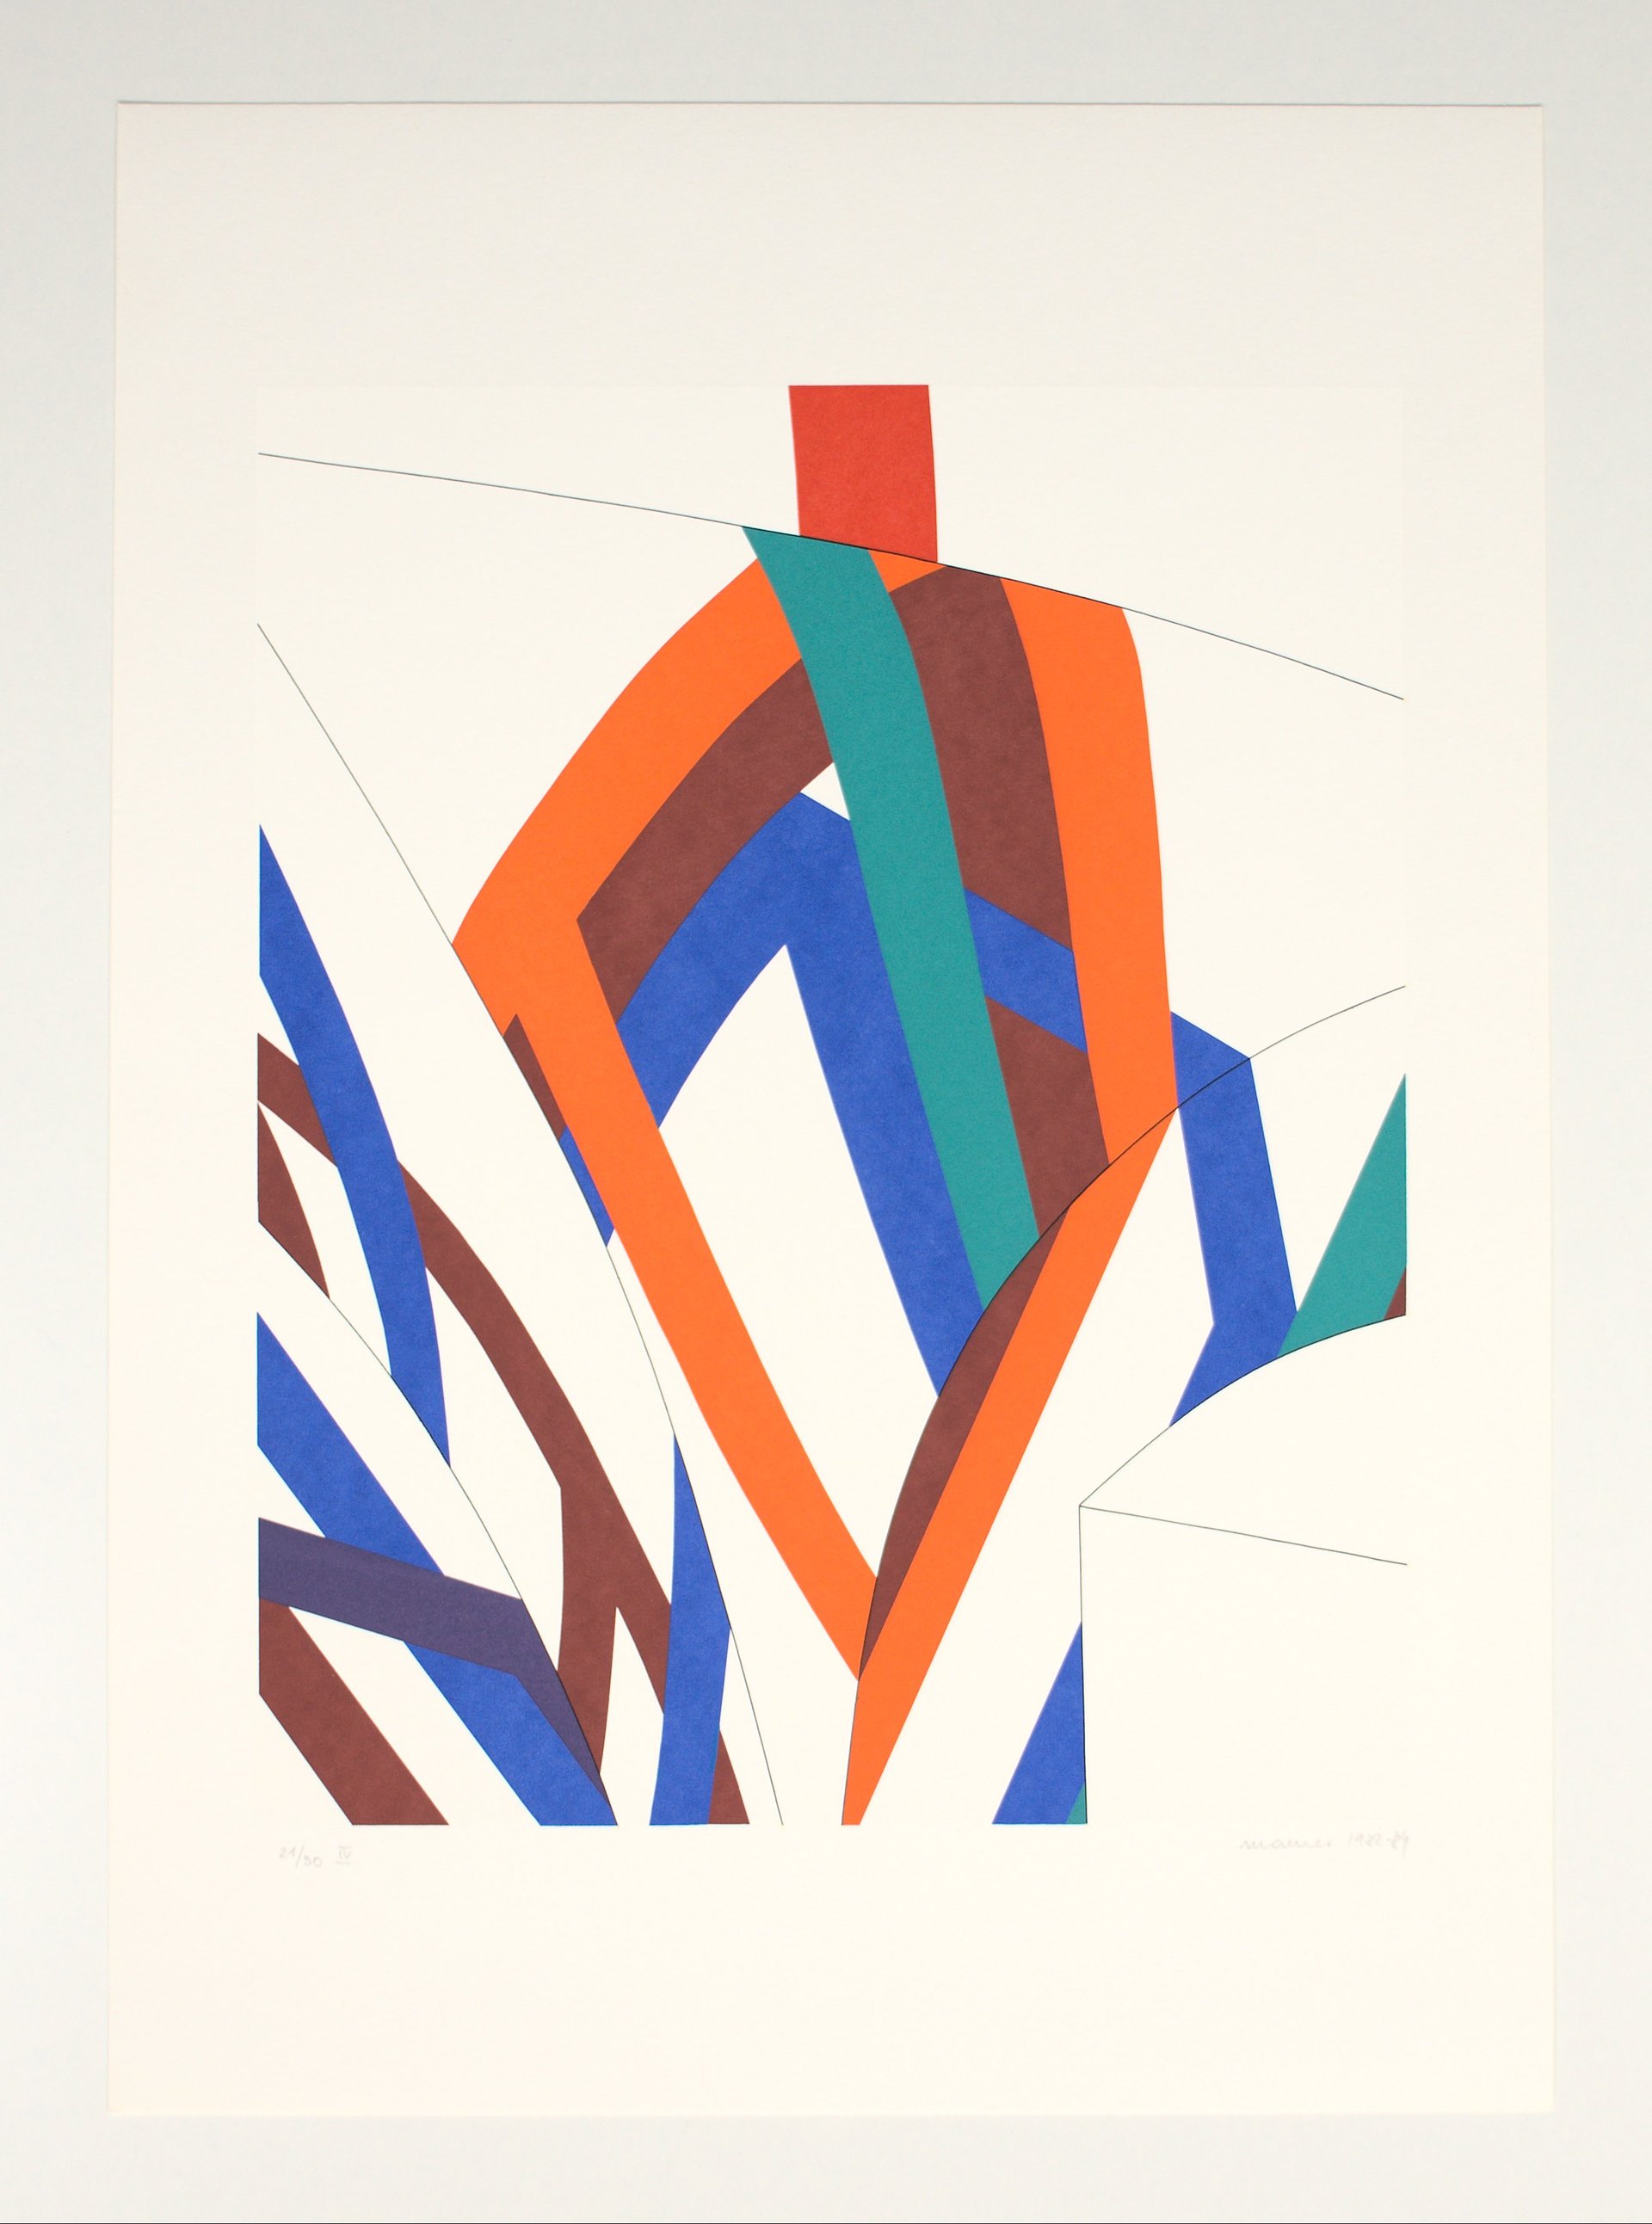 “raumteil (sekundär-) quasibild” (1984), silkscreen on laid paper, 70 x 50 cm